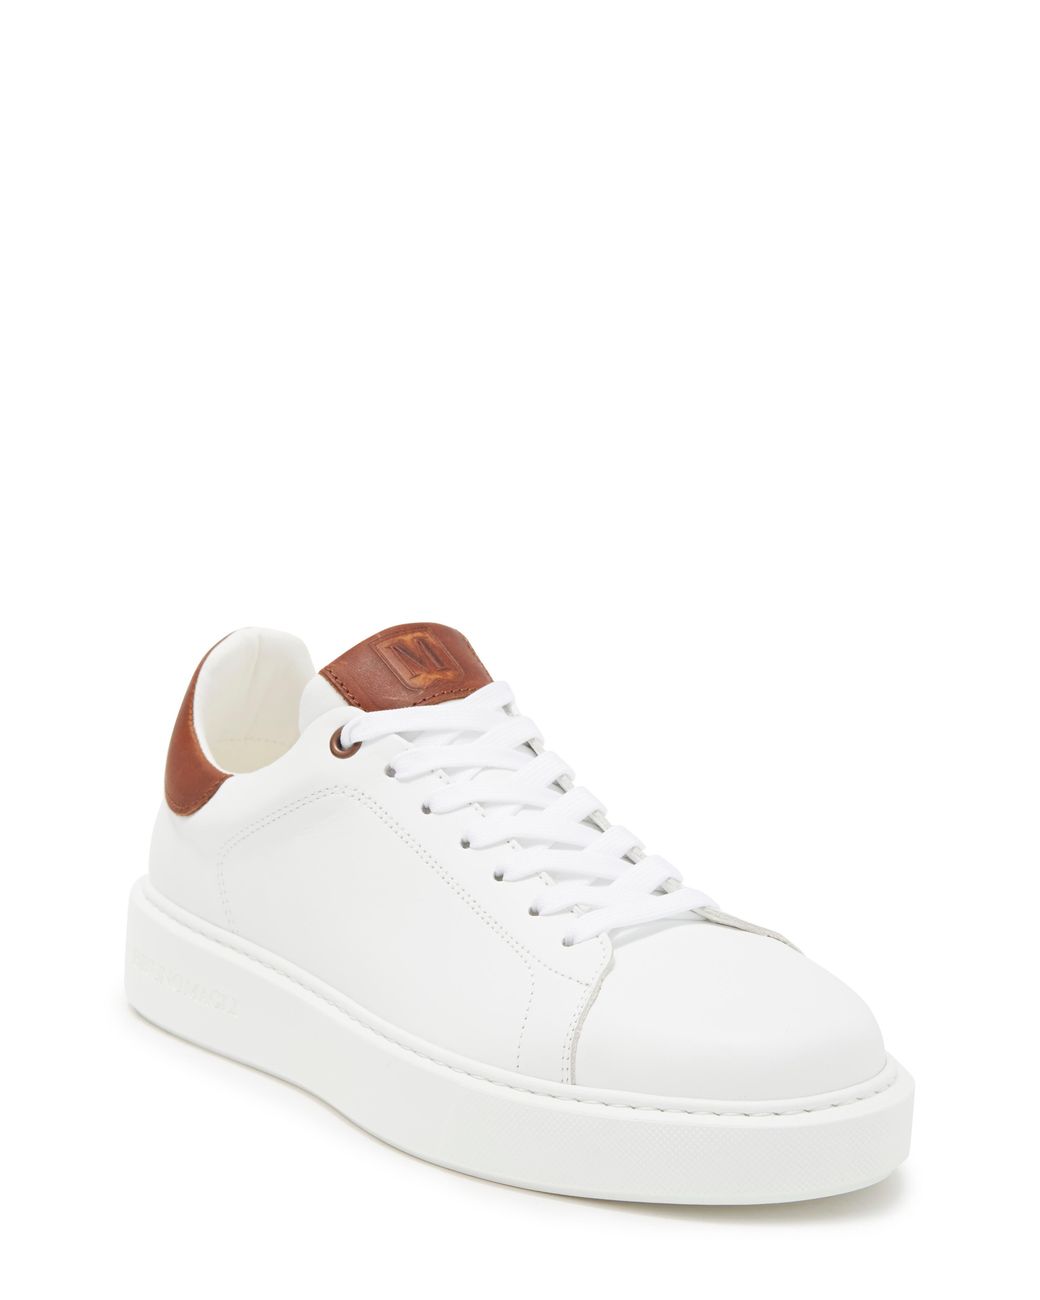 Bruno Magli Lucca Leather Sneaker in White for Men | Lyst